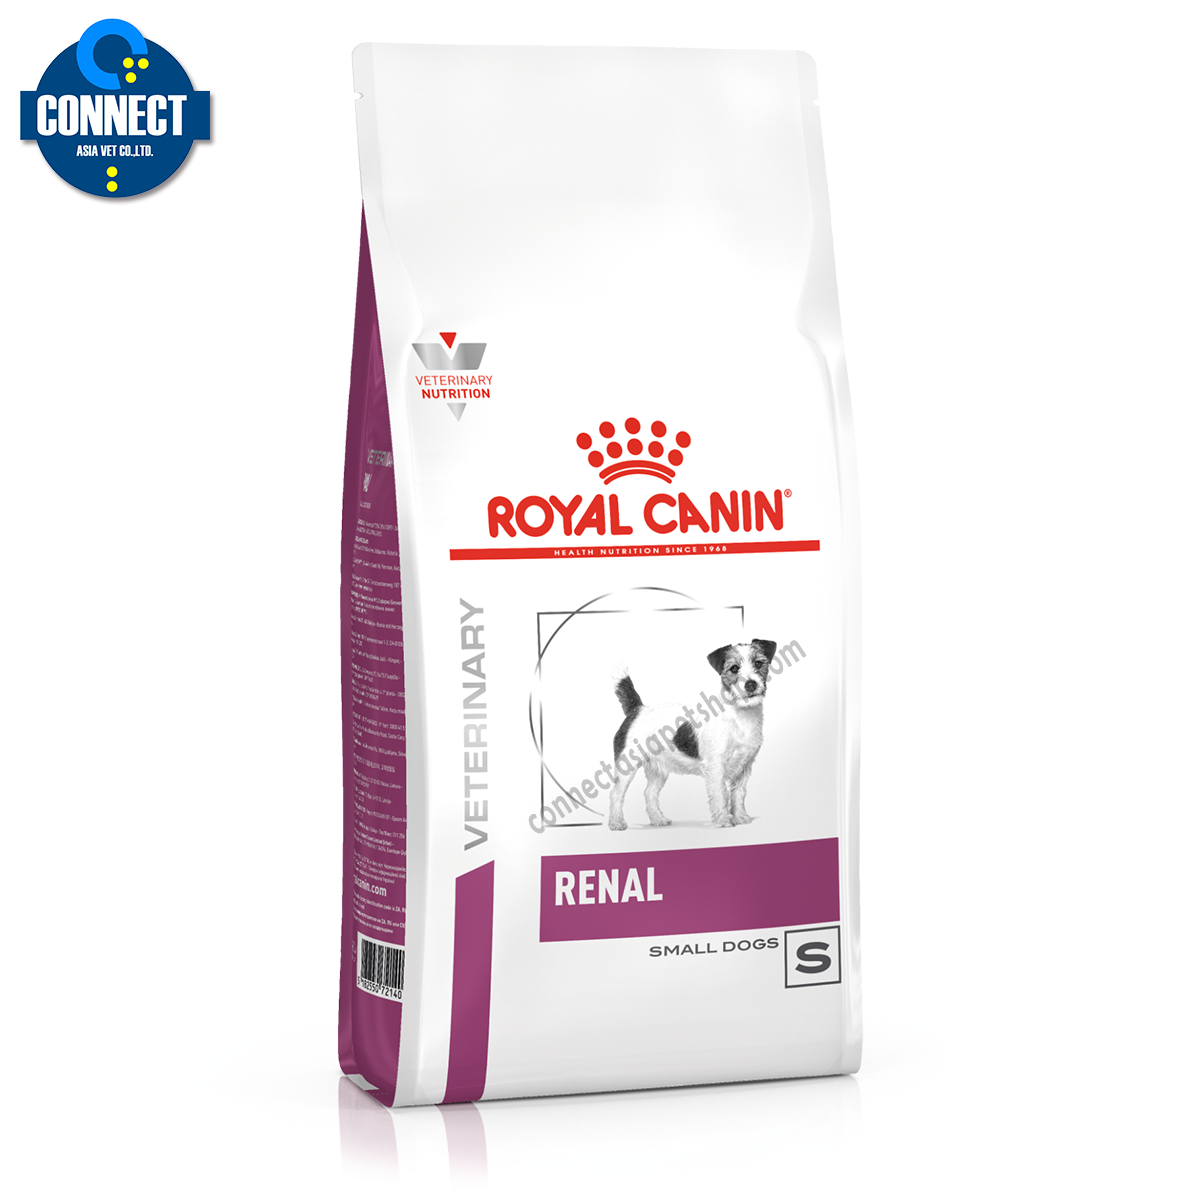 Royal Canin RENAL SMALL DOGS สุนัขพันธุ์เล็กโรคไต ขนาดถุง ( 500 g , 1.5 kg , 3.5 kg. )